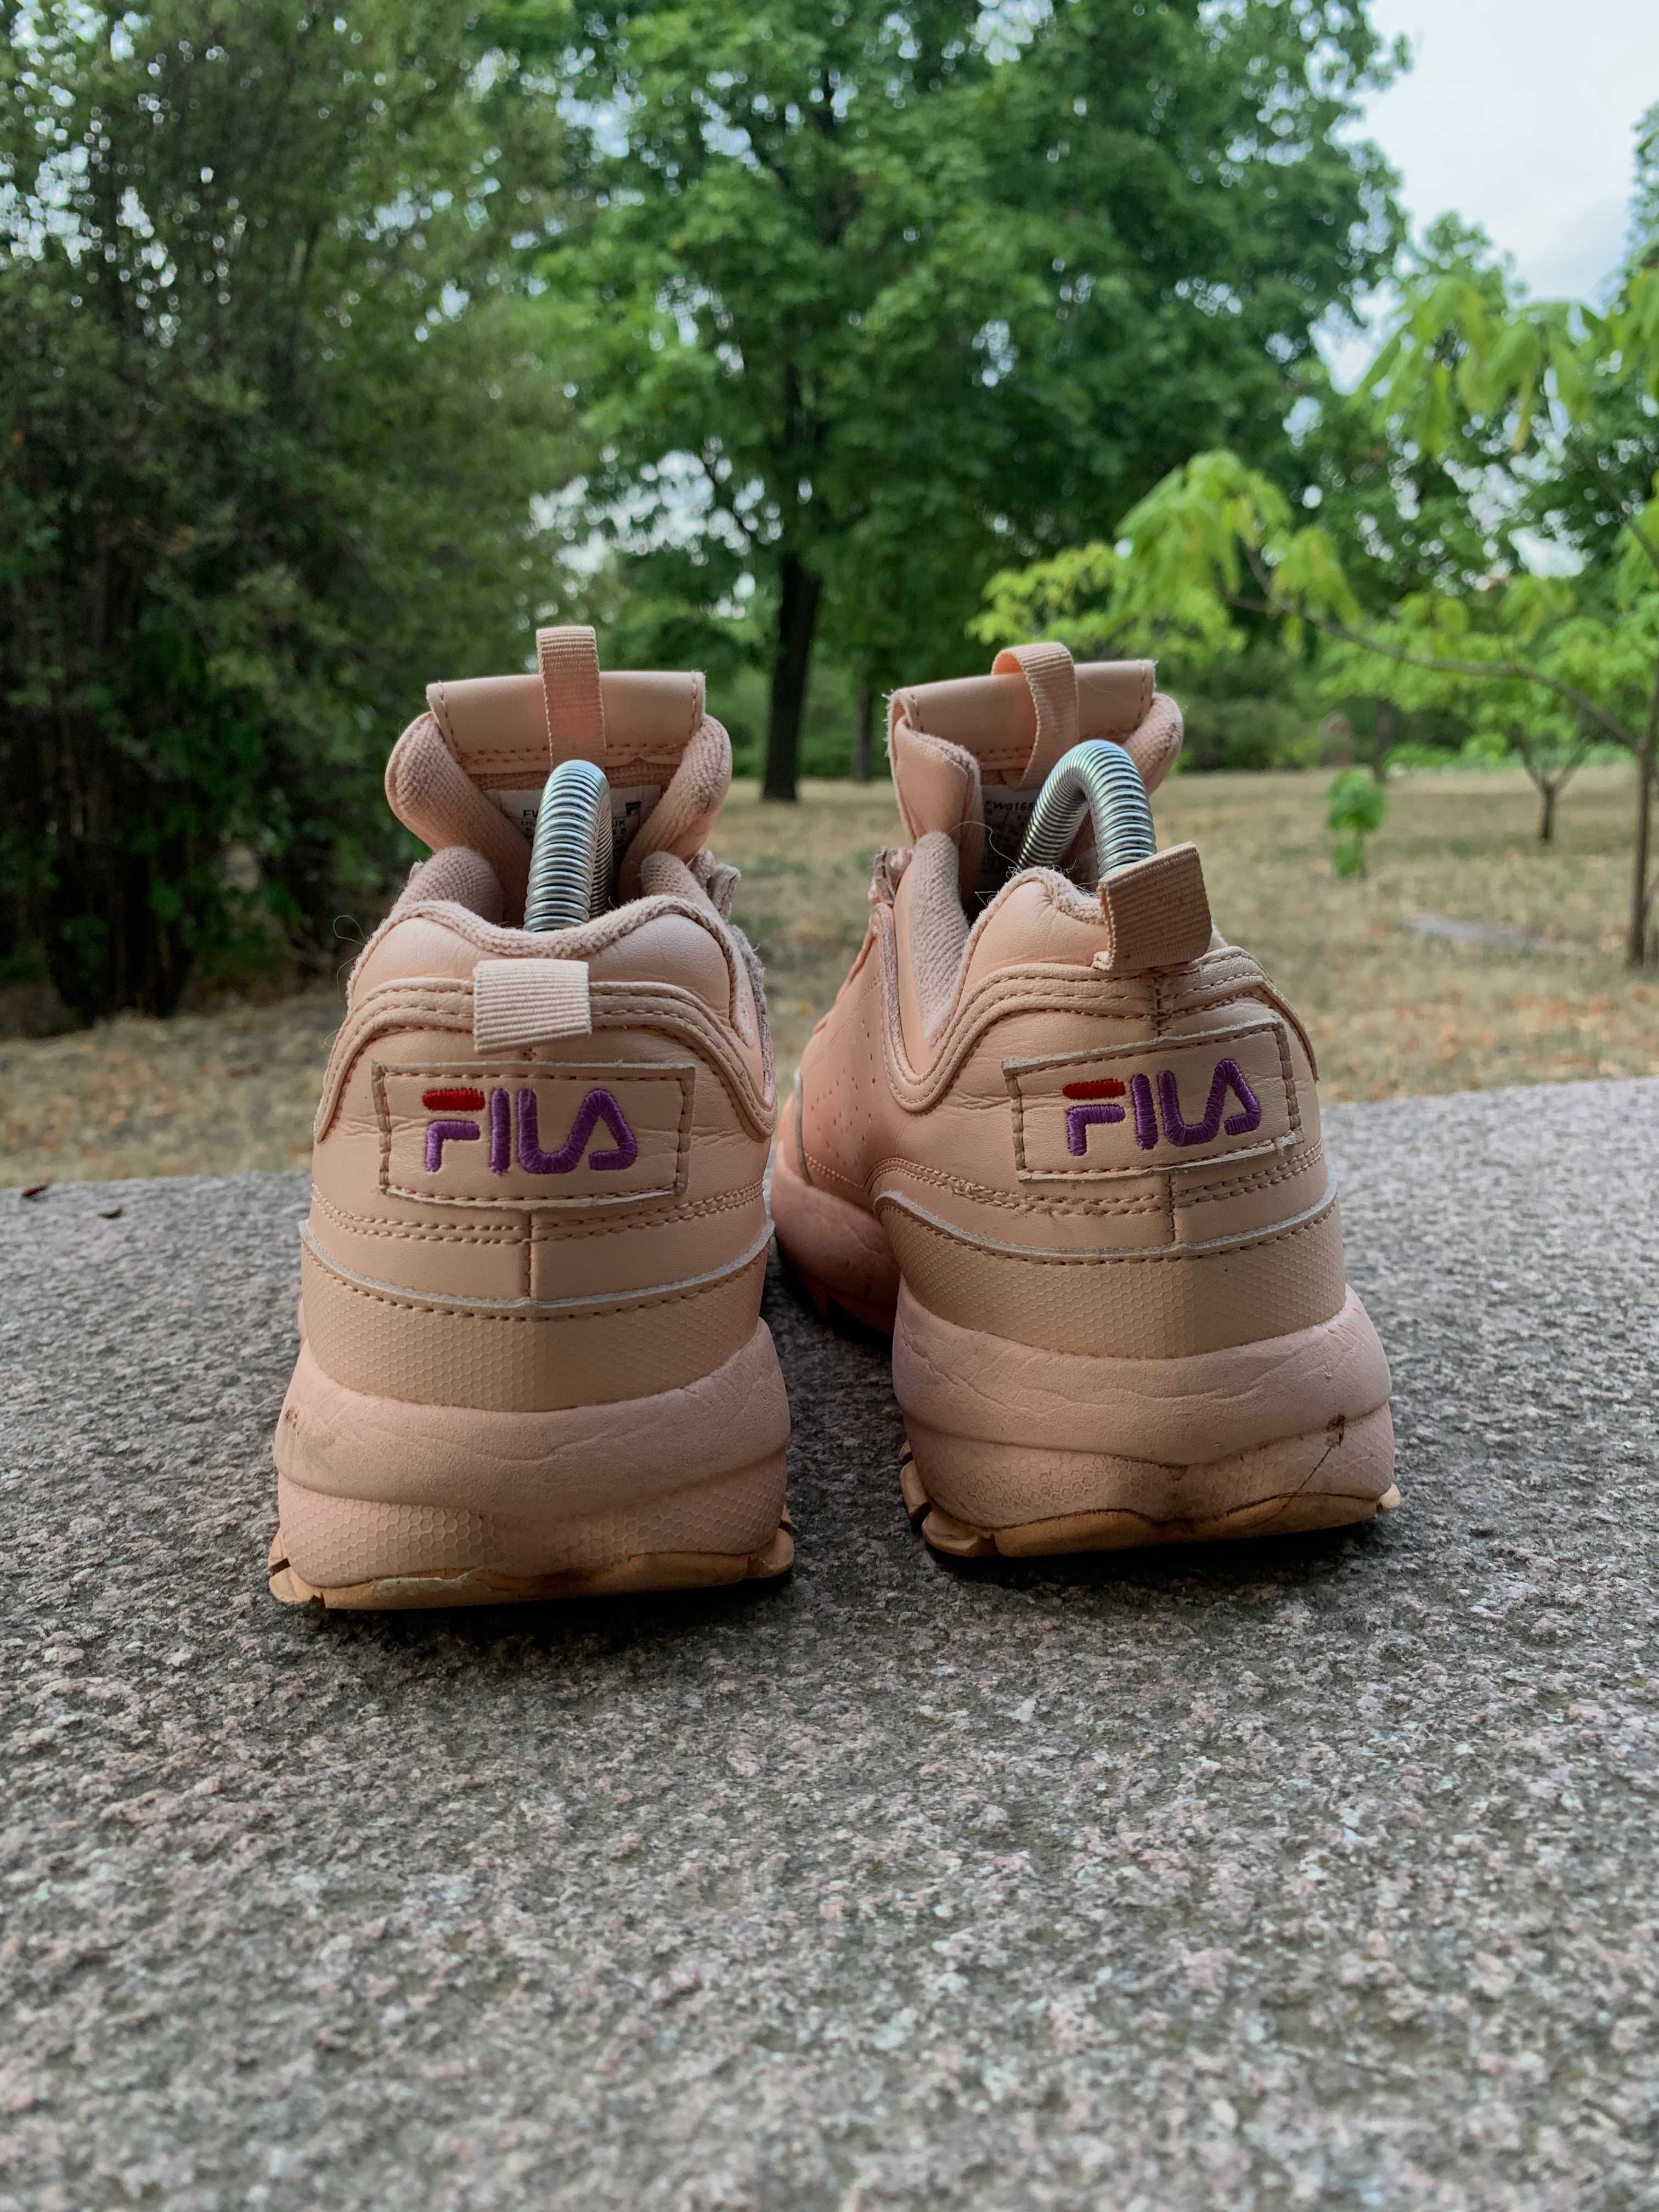 Кросівки Fila Disruptor, моднф (розовые, pink) sb, dunk. air force